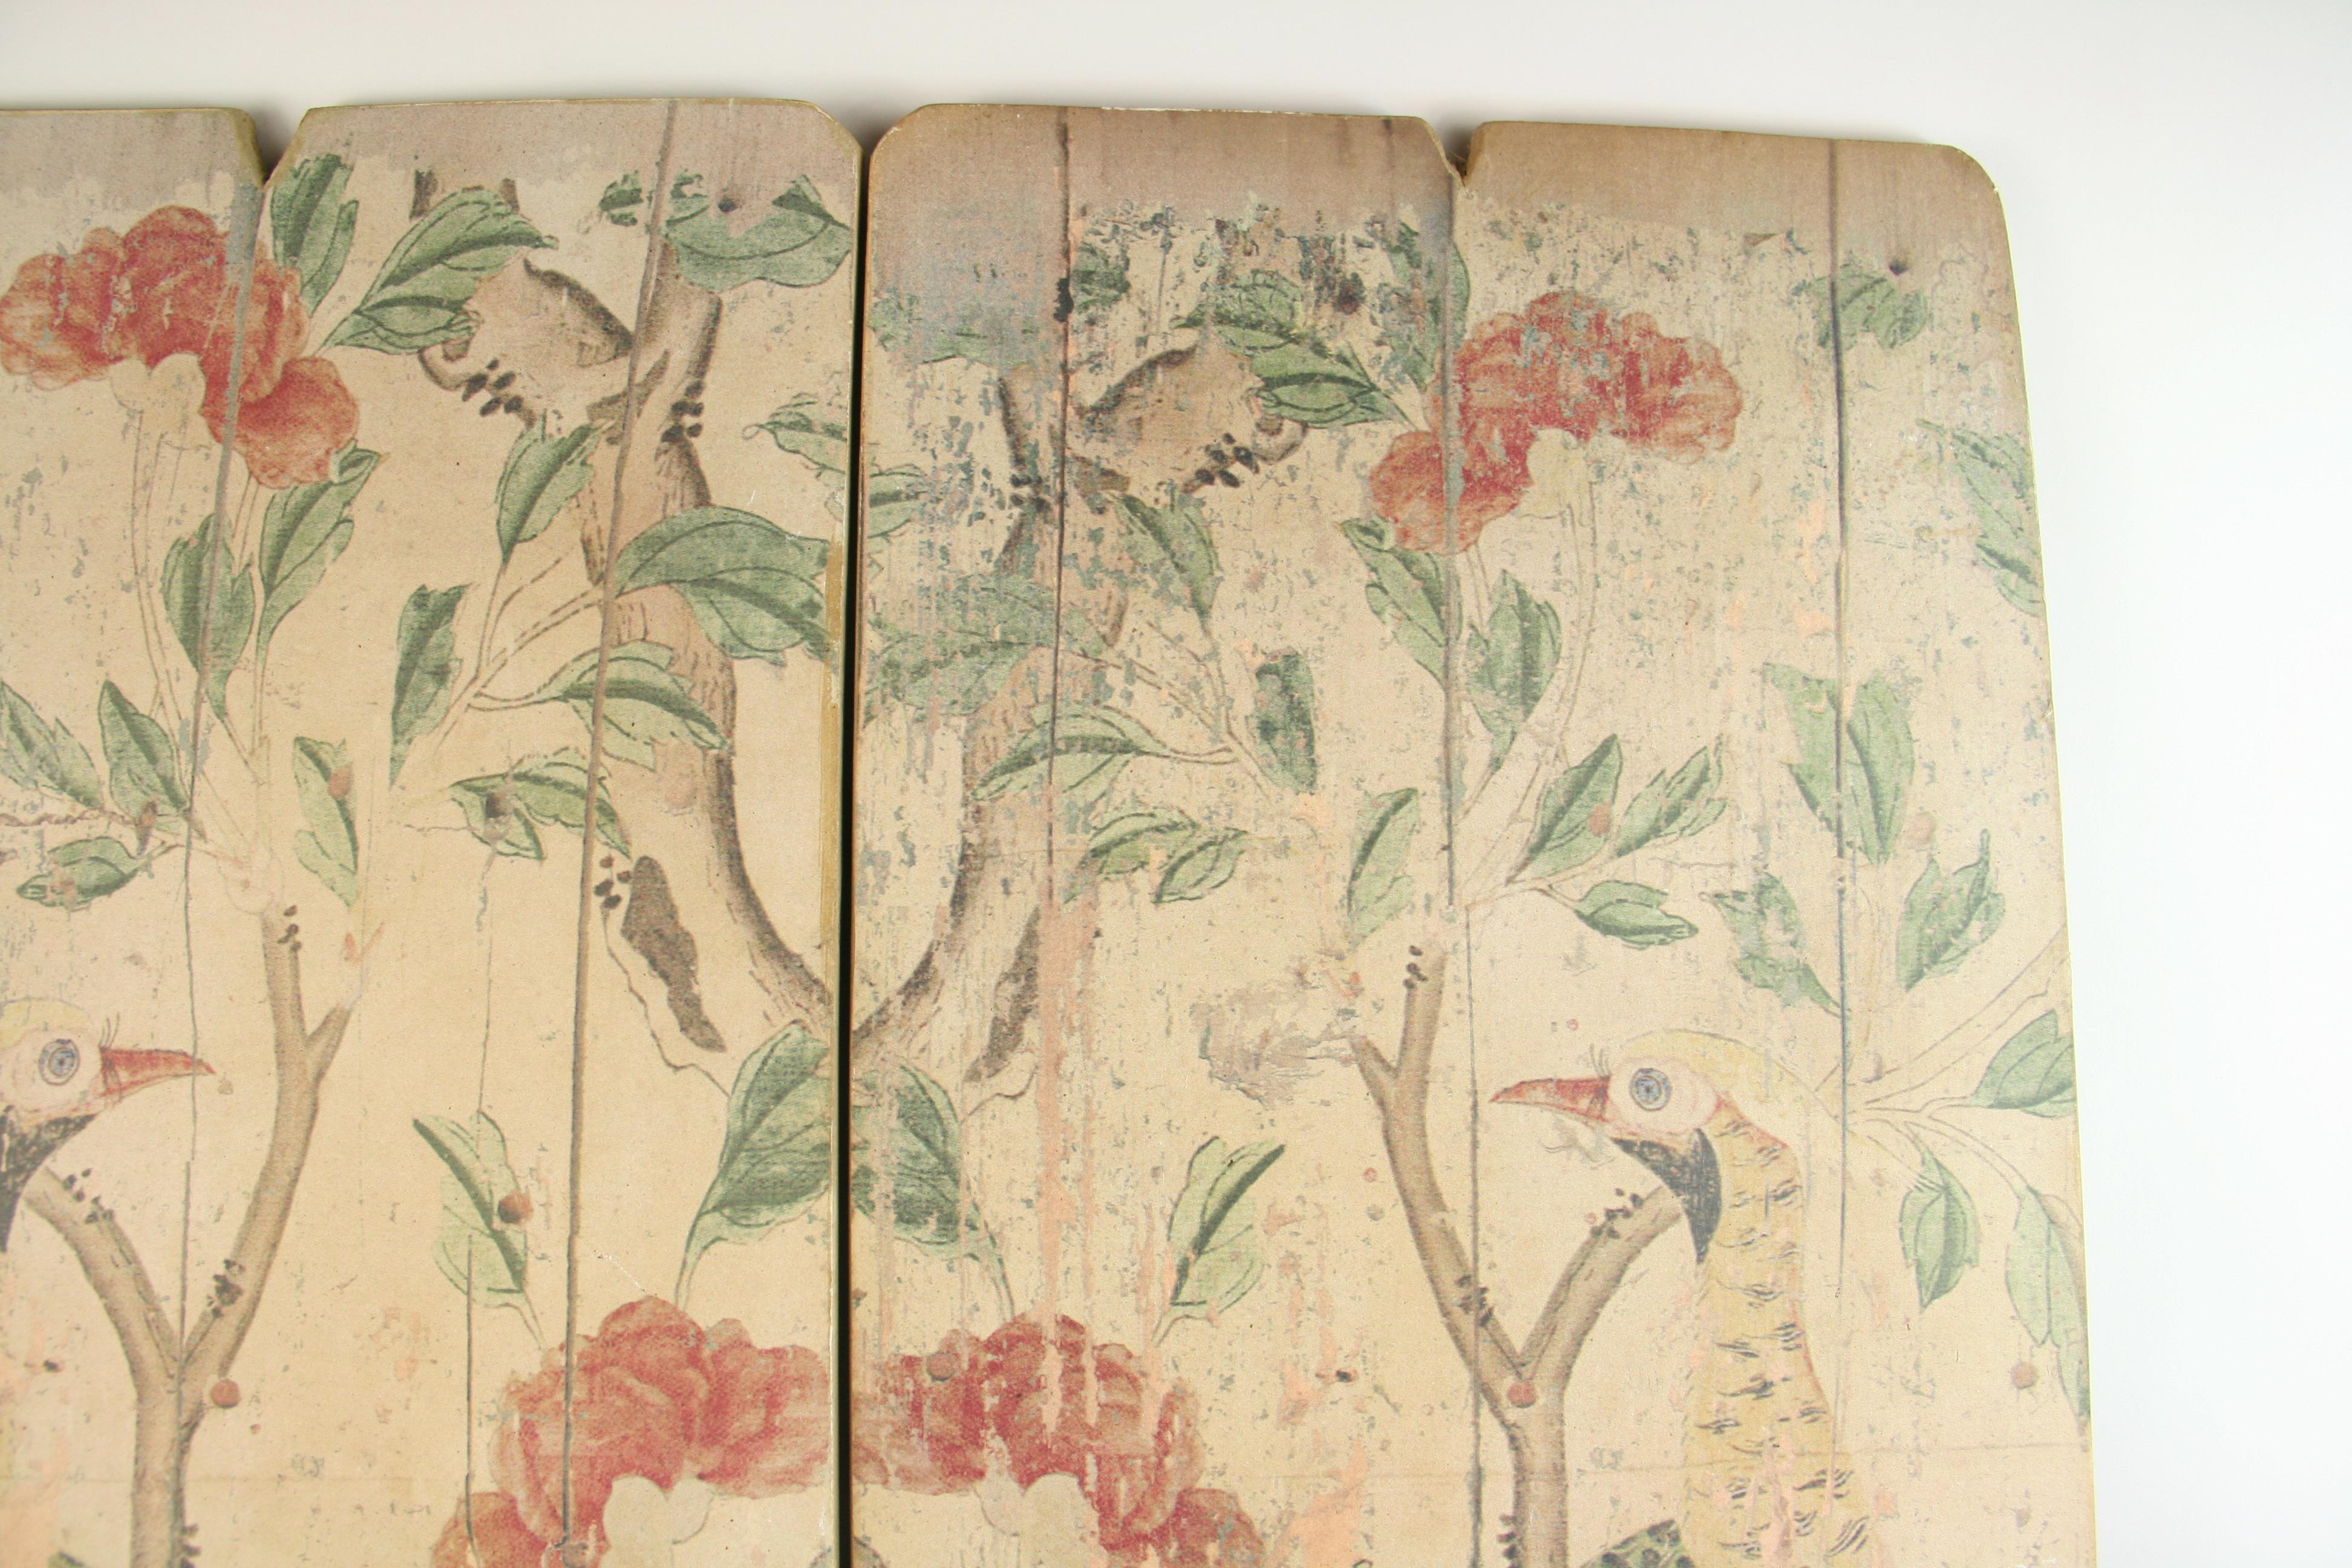 3760 pair of screen printed wood Asian panels depicting birds in nature.
Each wood panel 13.5